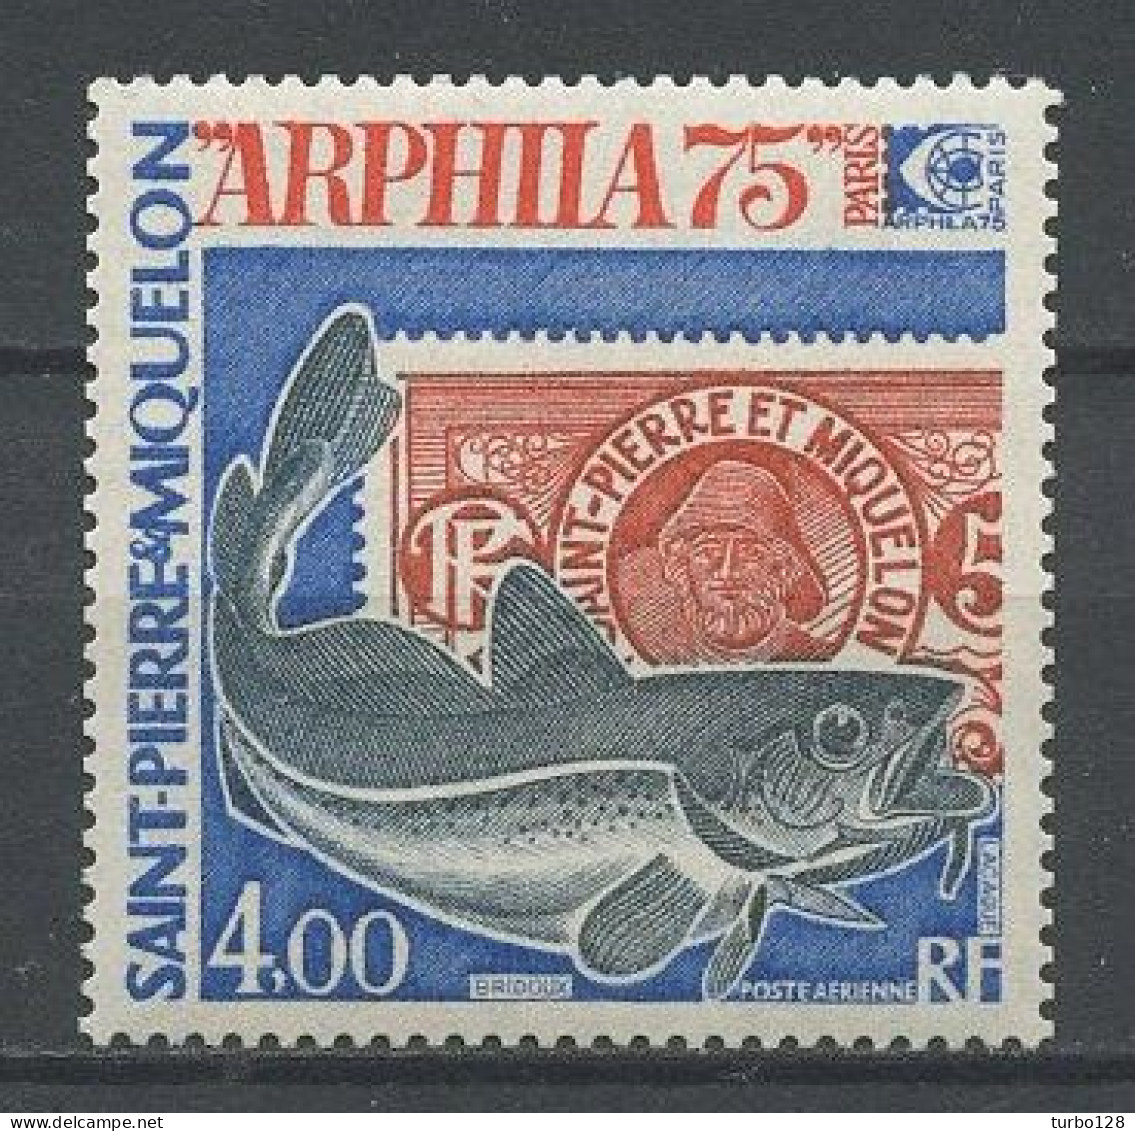 SPM MIQUELON 1975 PA N° 60 ** Neuf MNH Superbe C 25,20 € ARPHILA 75 Poissons Fishes Animaux Exposition Philatélique - Unused Stamps